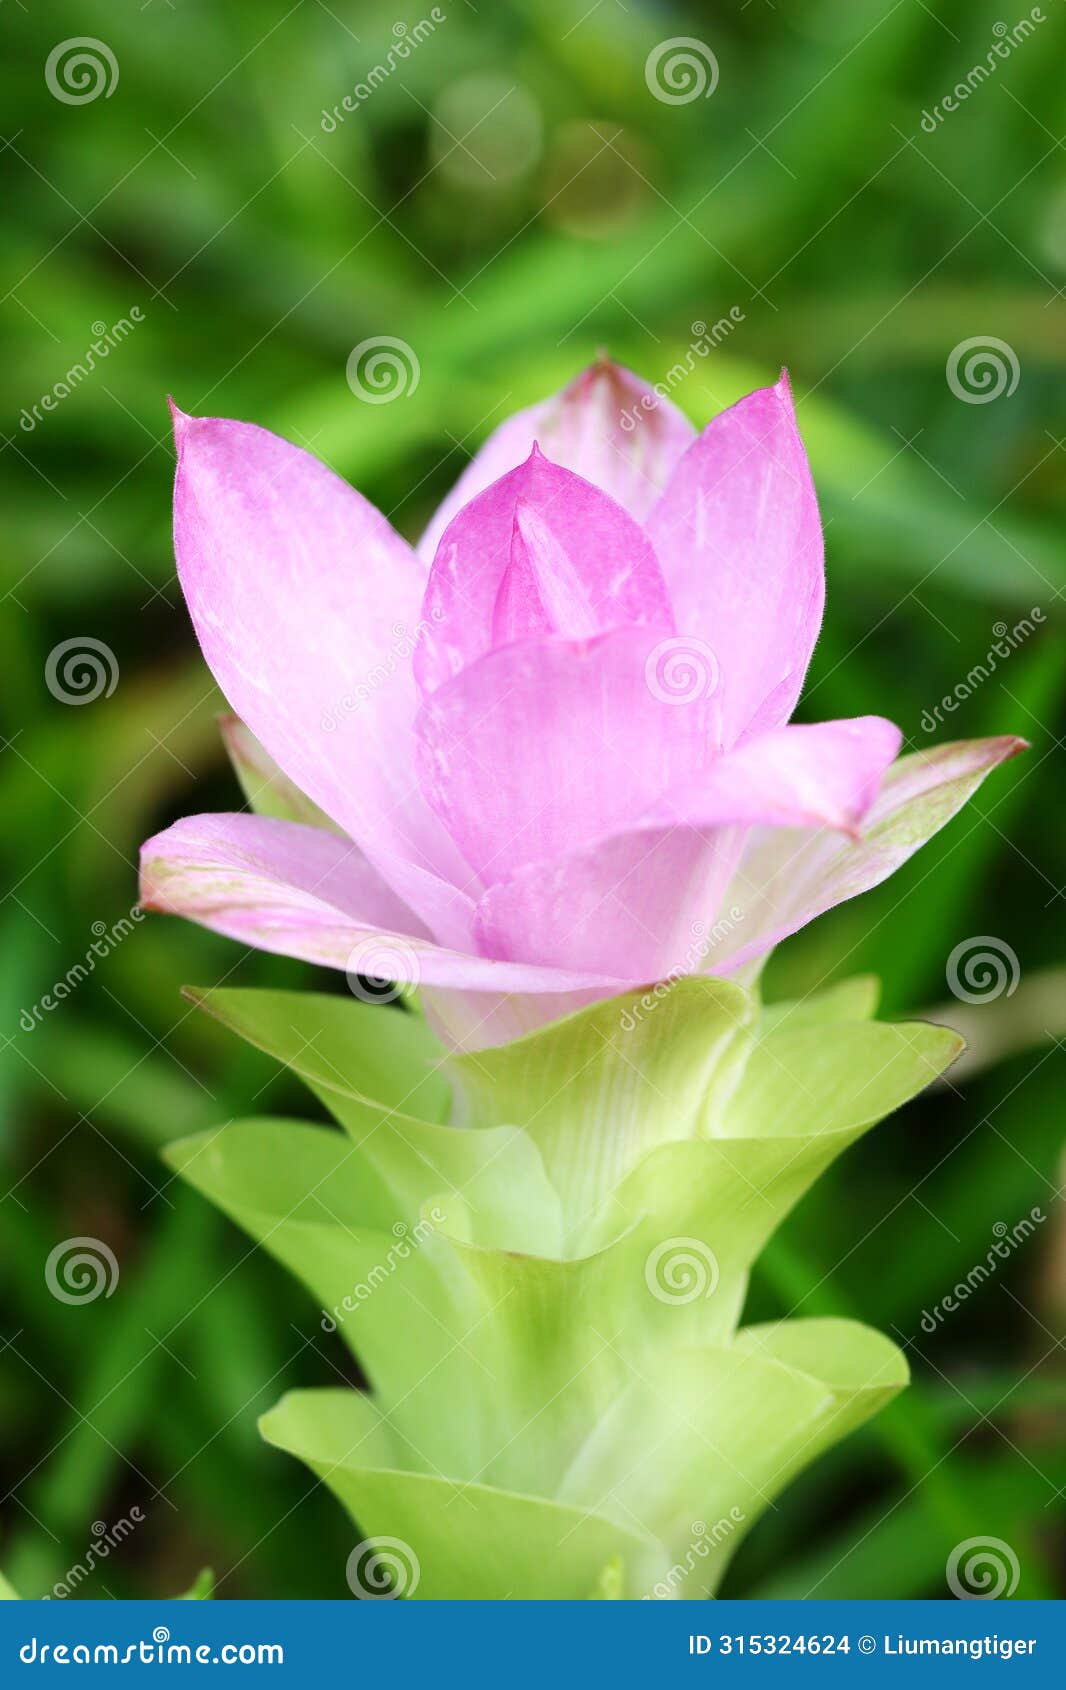 the flower of curcuma aromatica